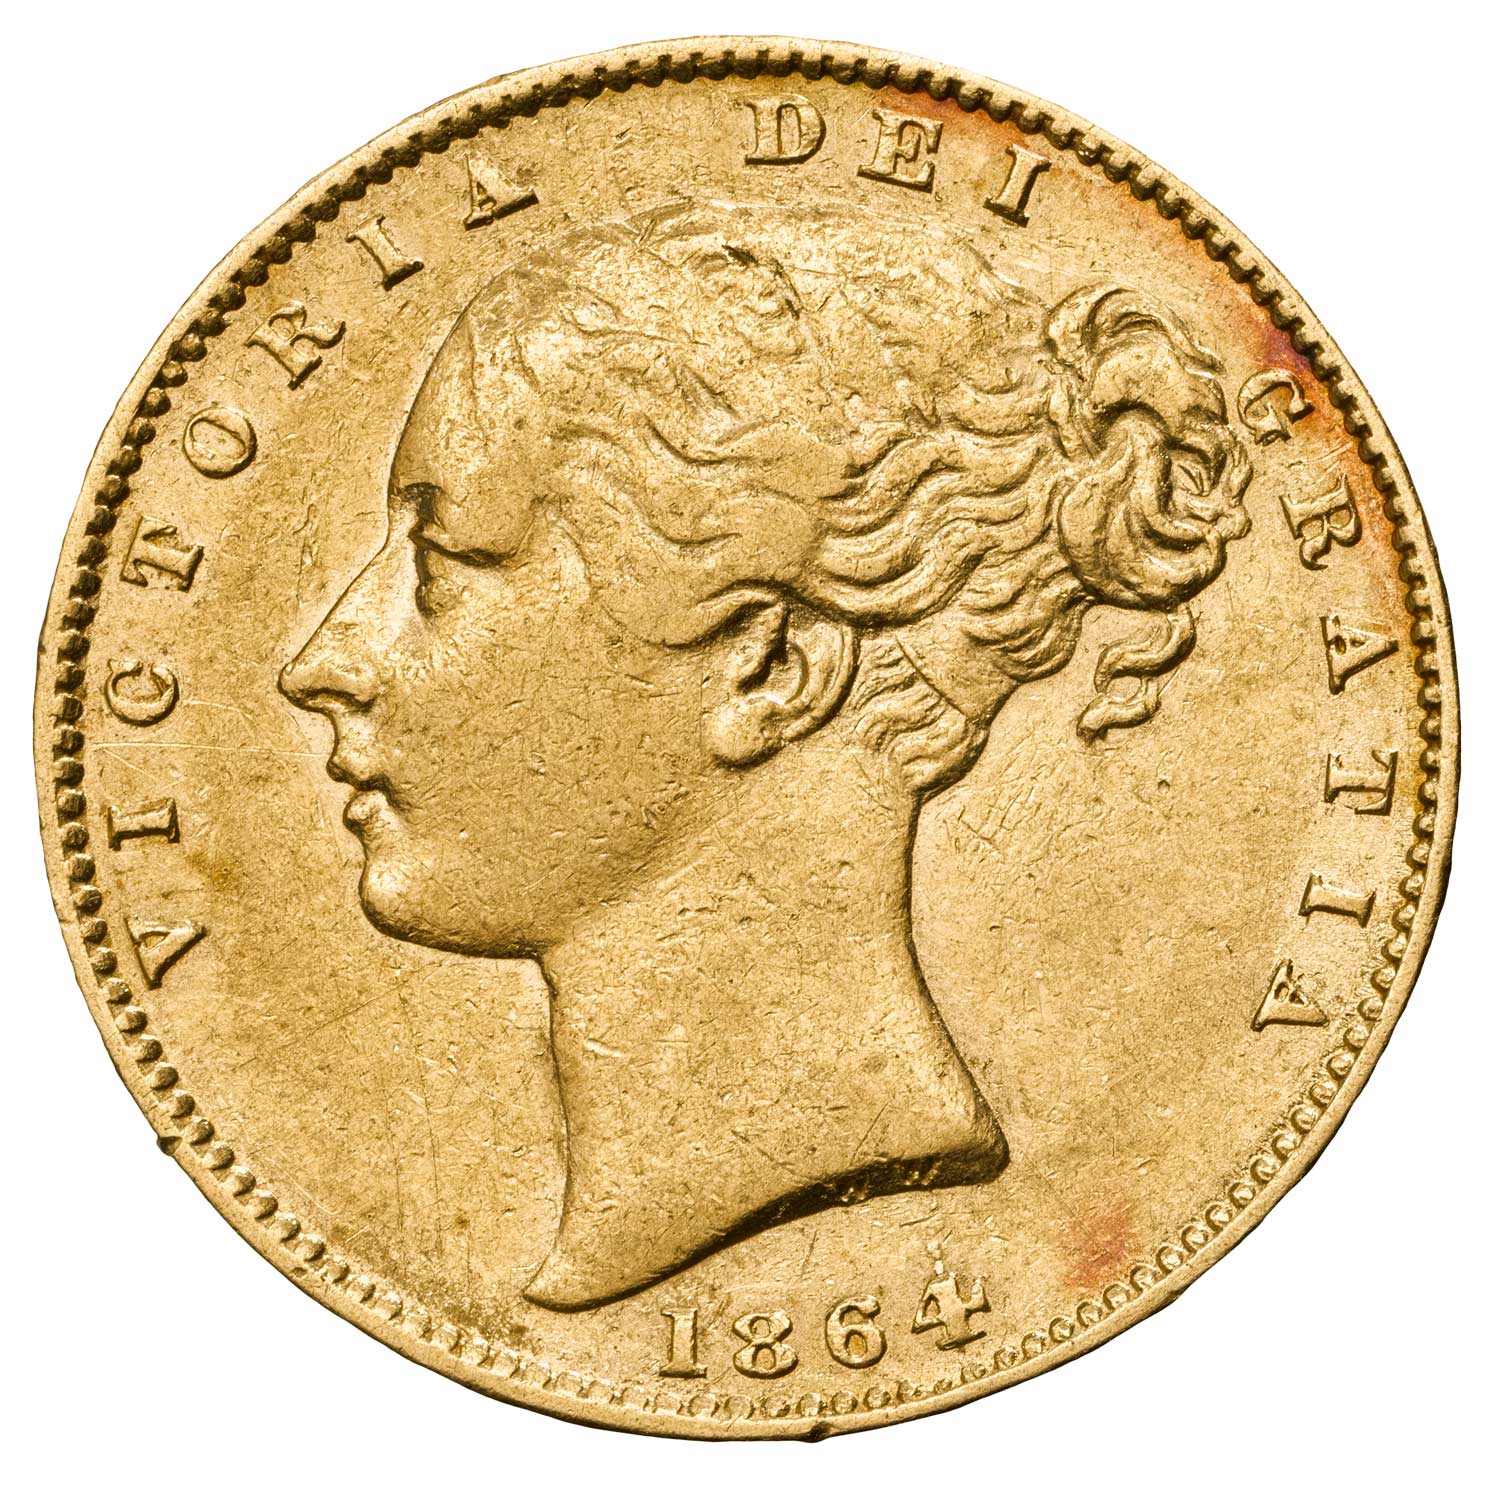 1864 Queen Victoria Young Head Sovereign